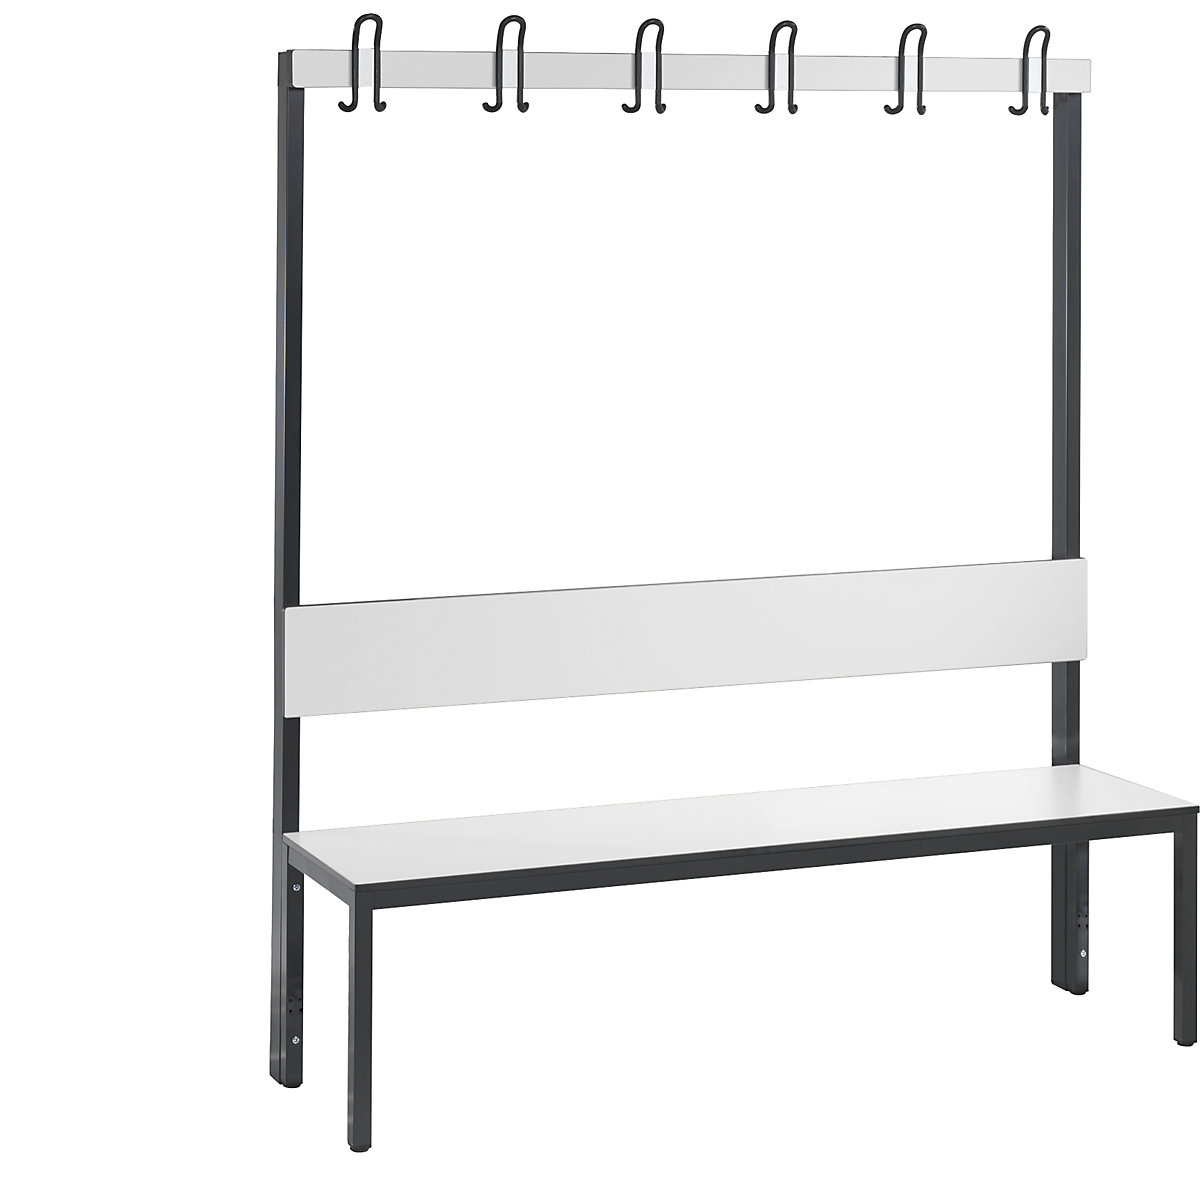 BASIC PLUS cloakroom bench, single sided – C+P, seat HPL, hook rail, length 1500 mm, white-3